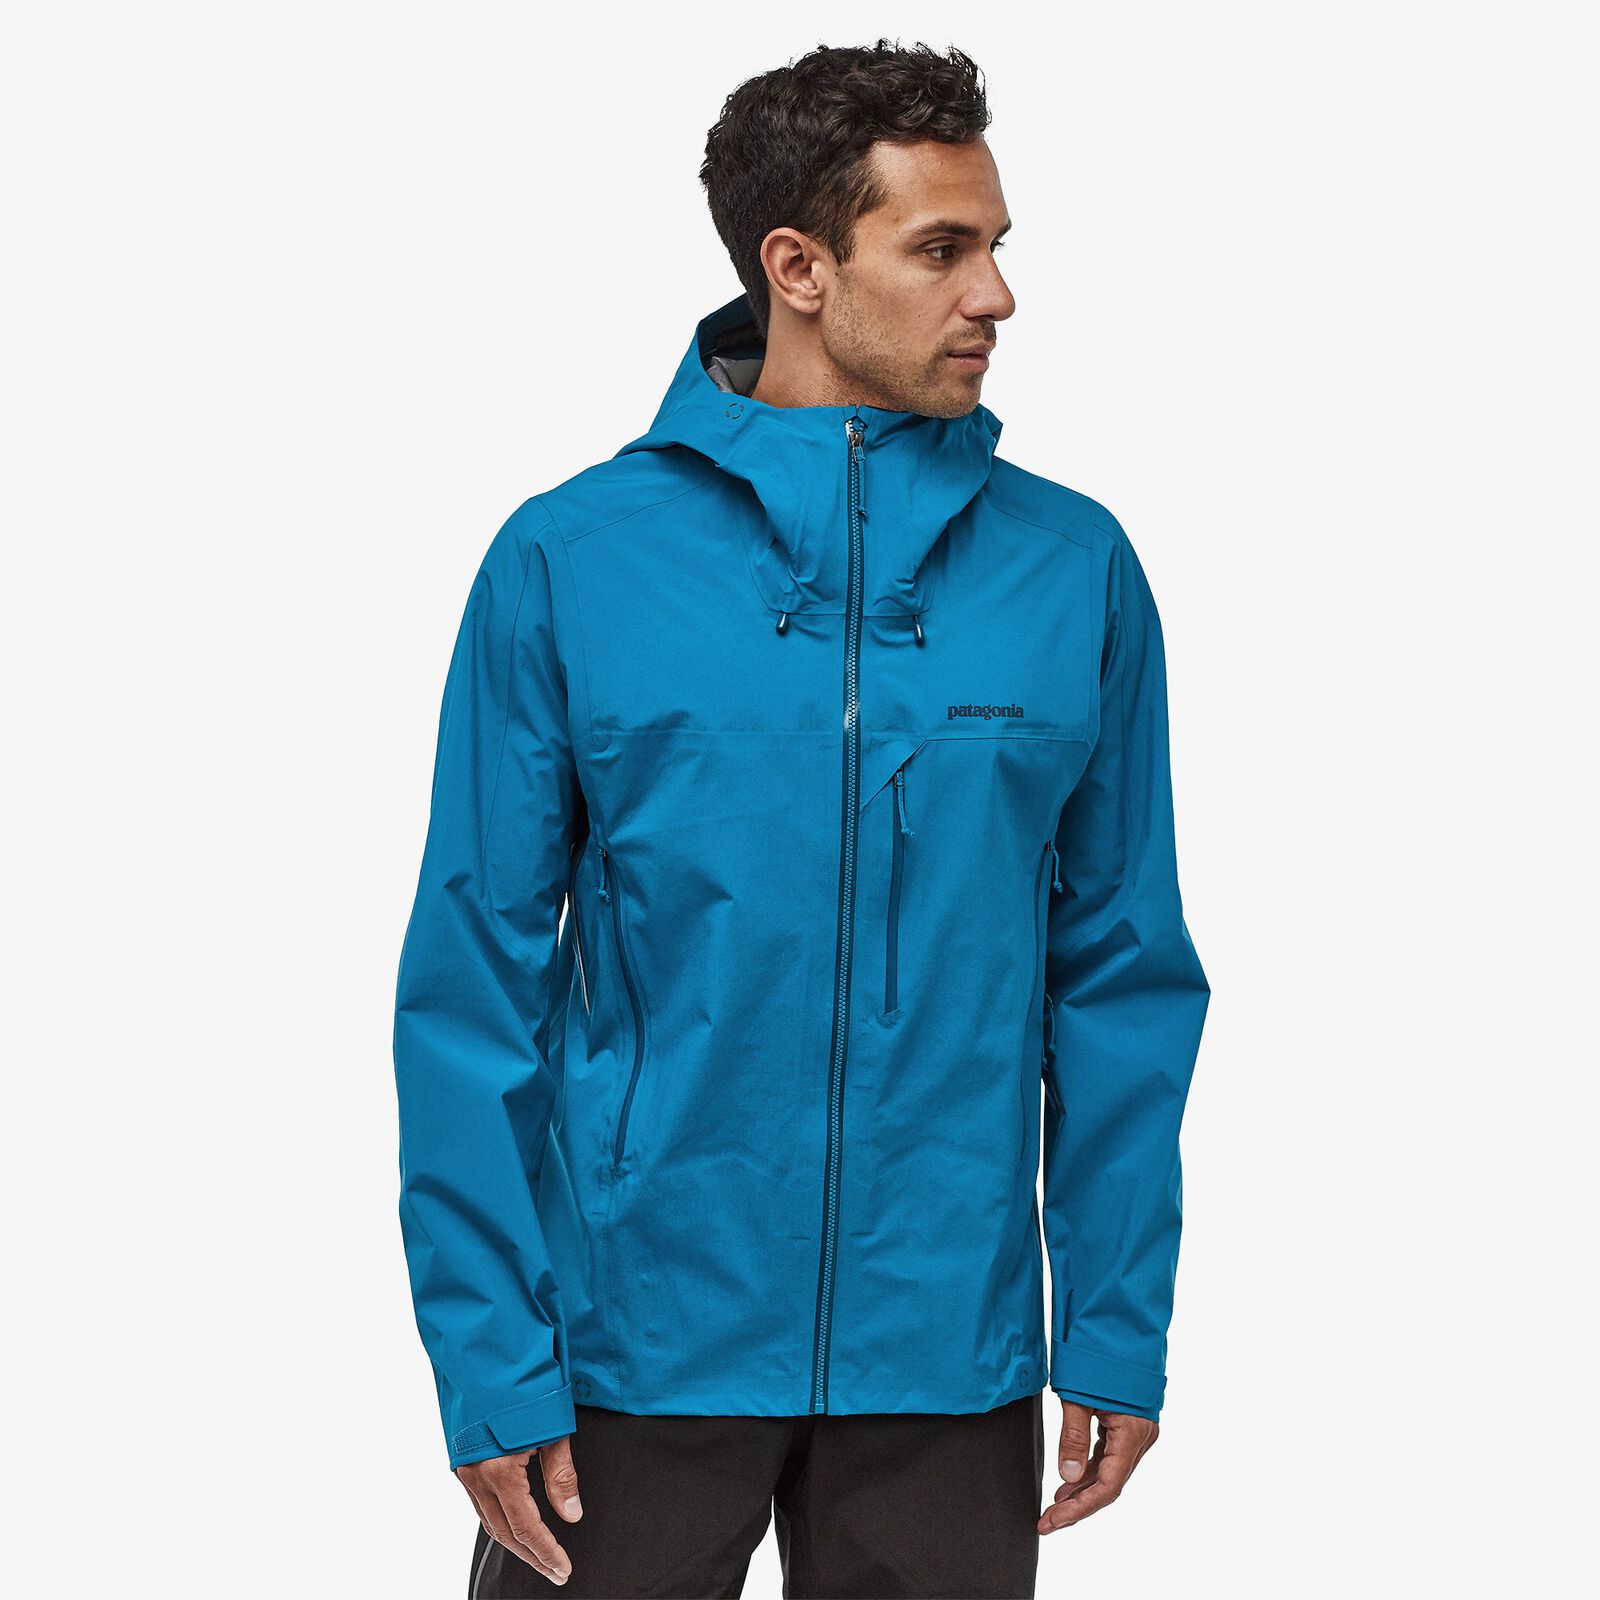 Patagonia Men's Pluma Alpine Jacket